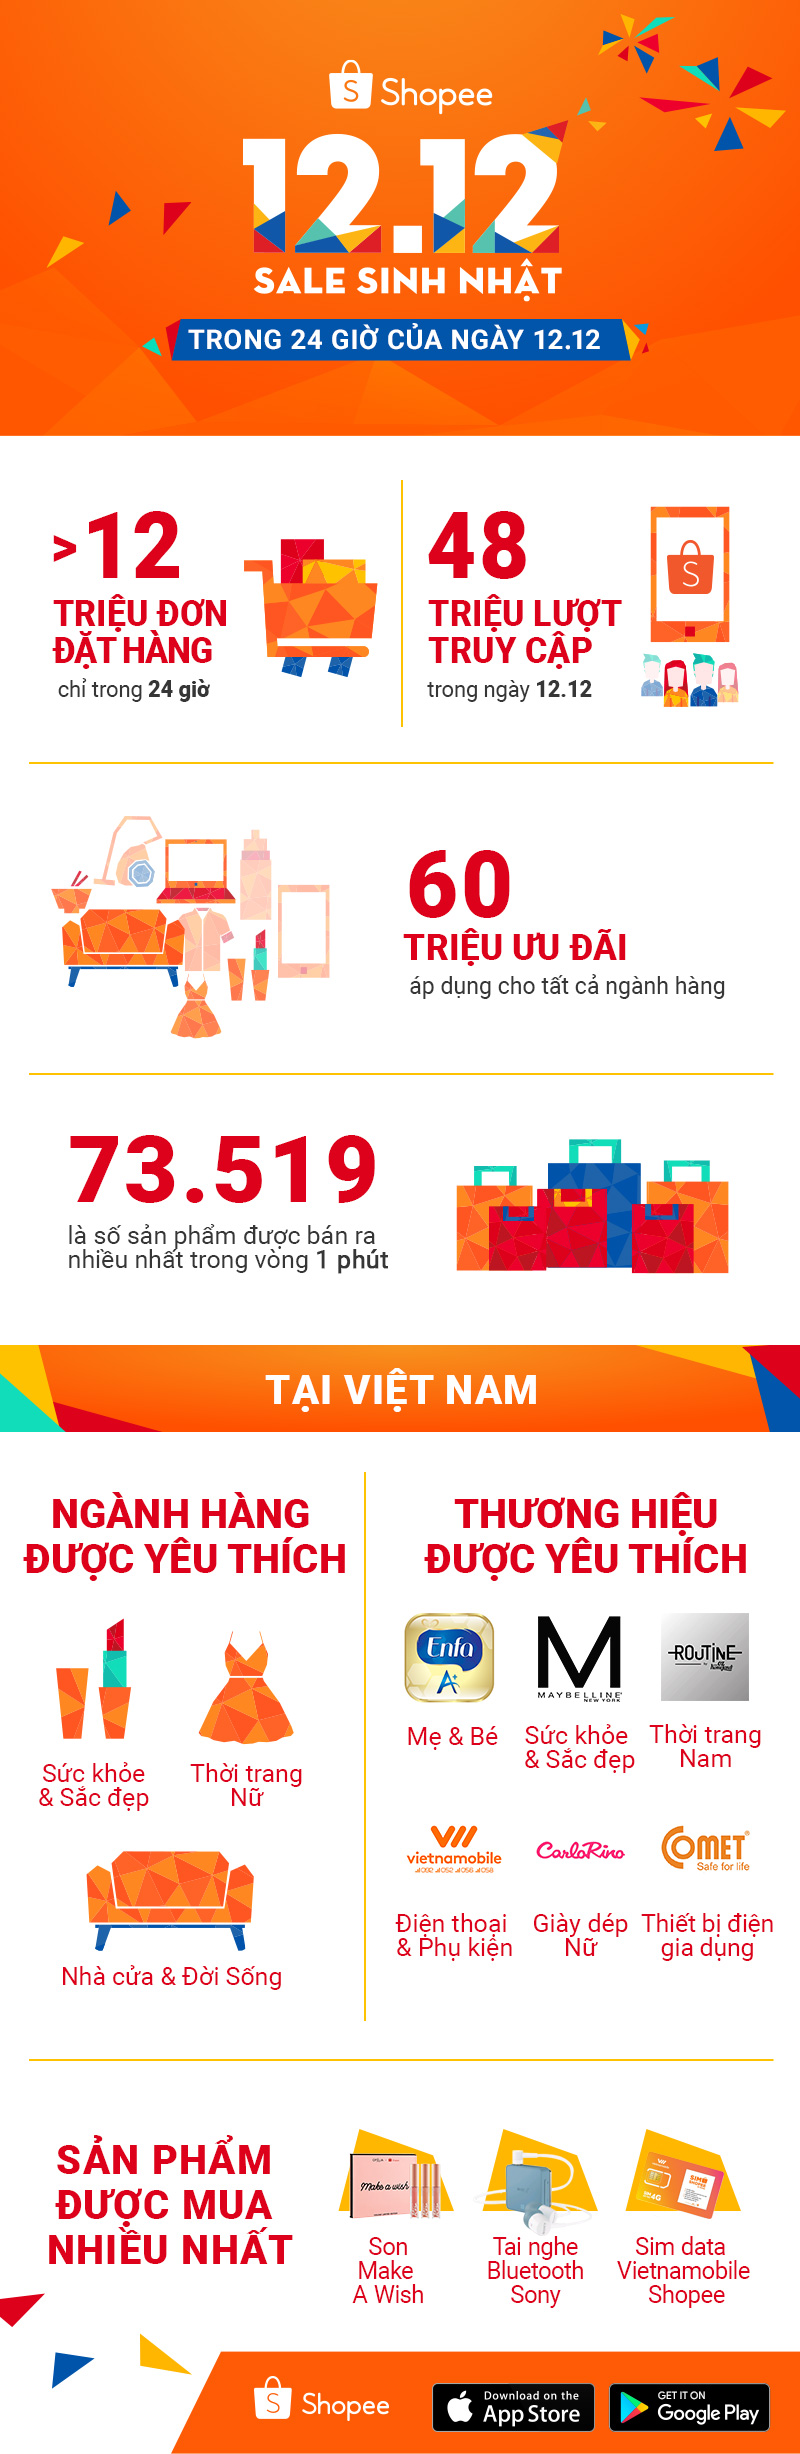 vn-infographic_version-vietnamese_final.jpg